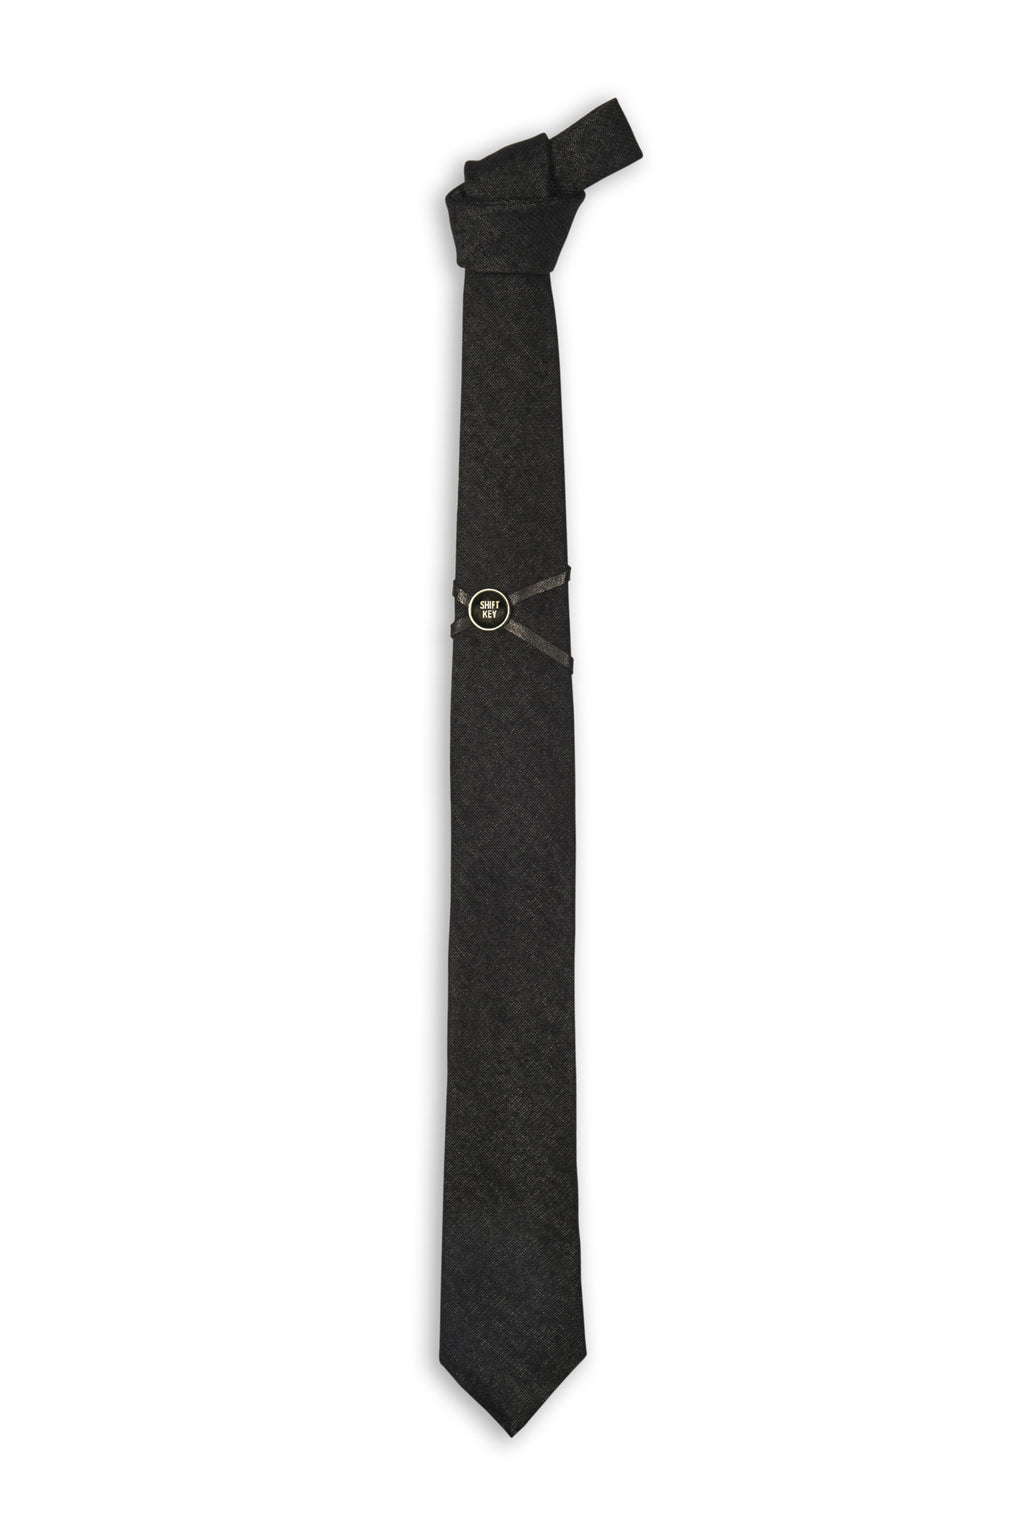 Cravate laine noire avec cuir et touche vintage dactylo - Black wool tie with leather and vintage typewriter key